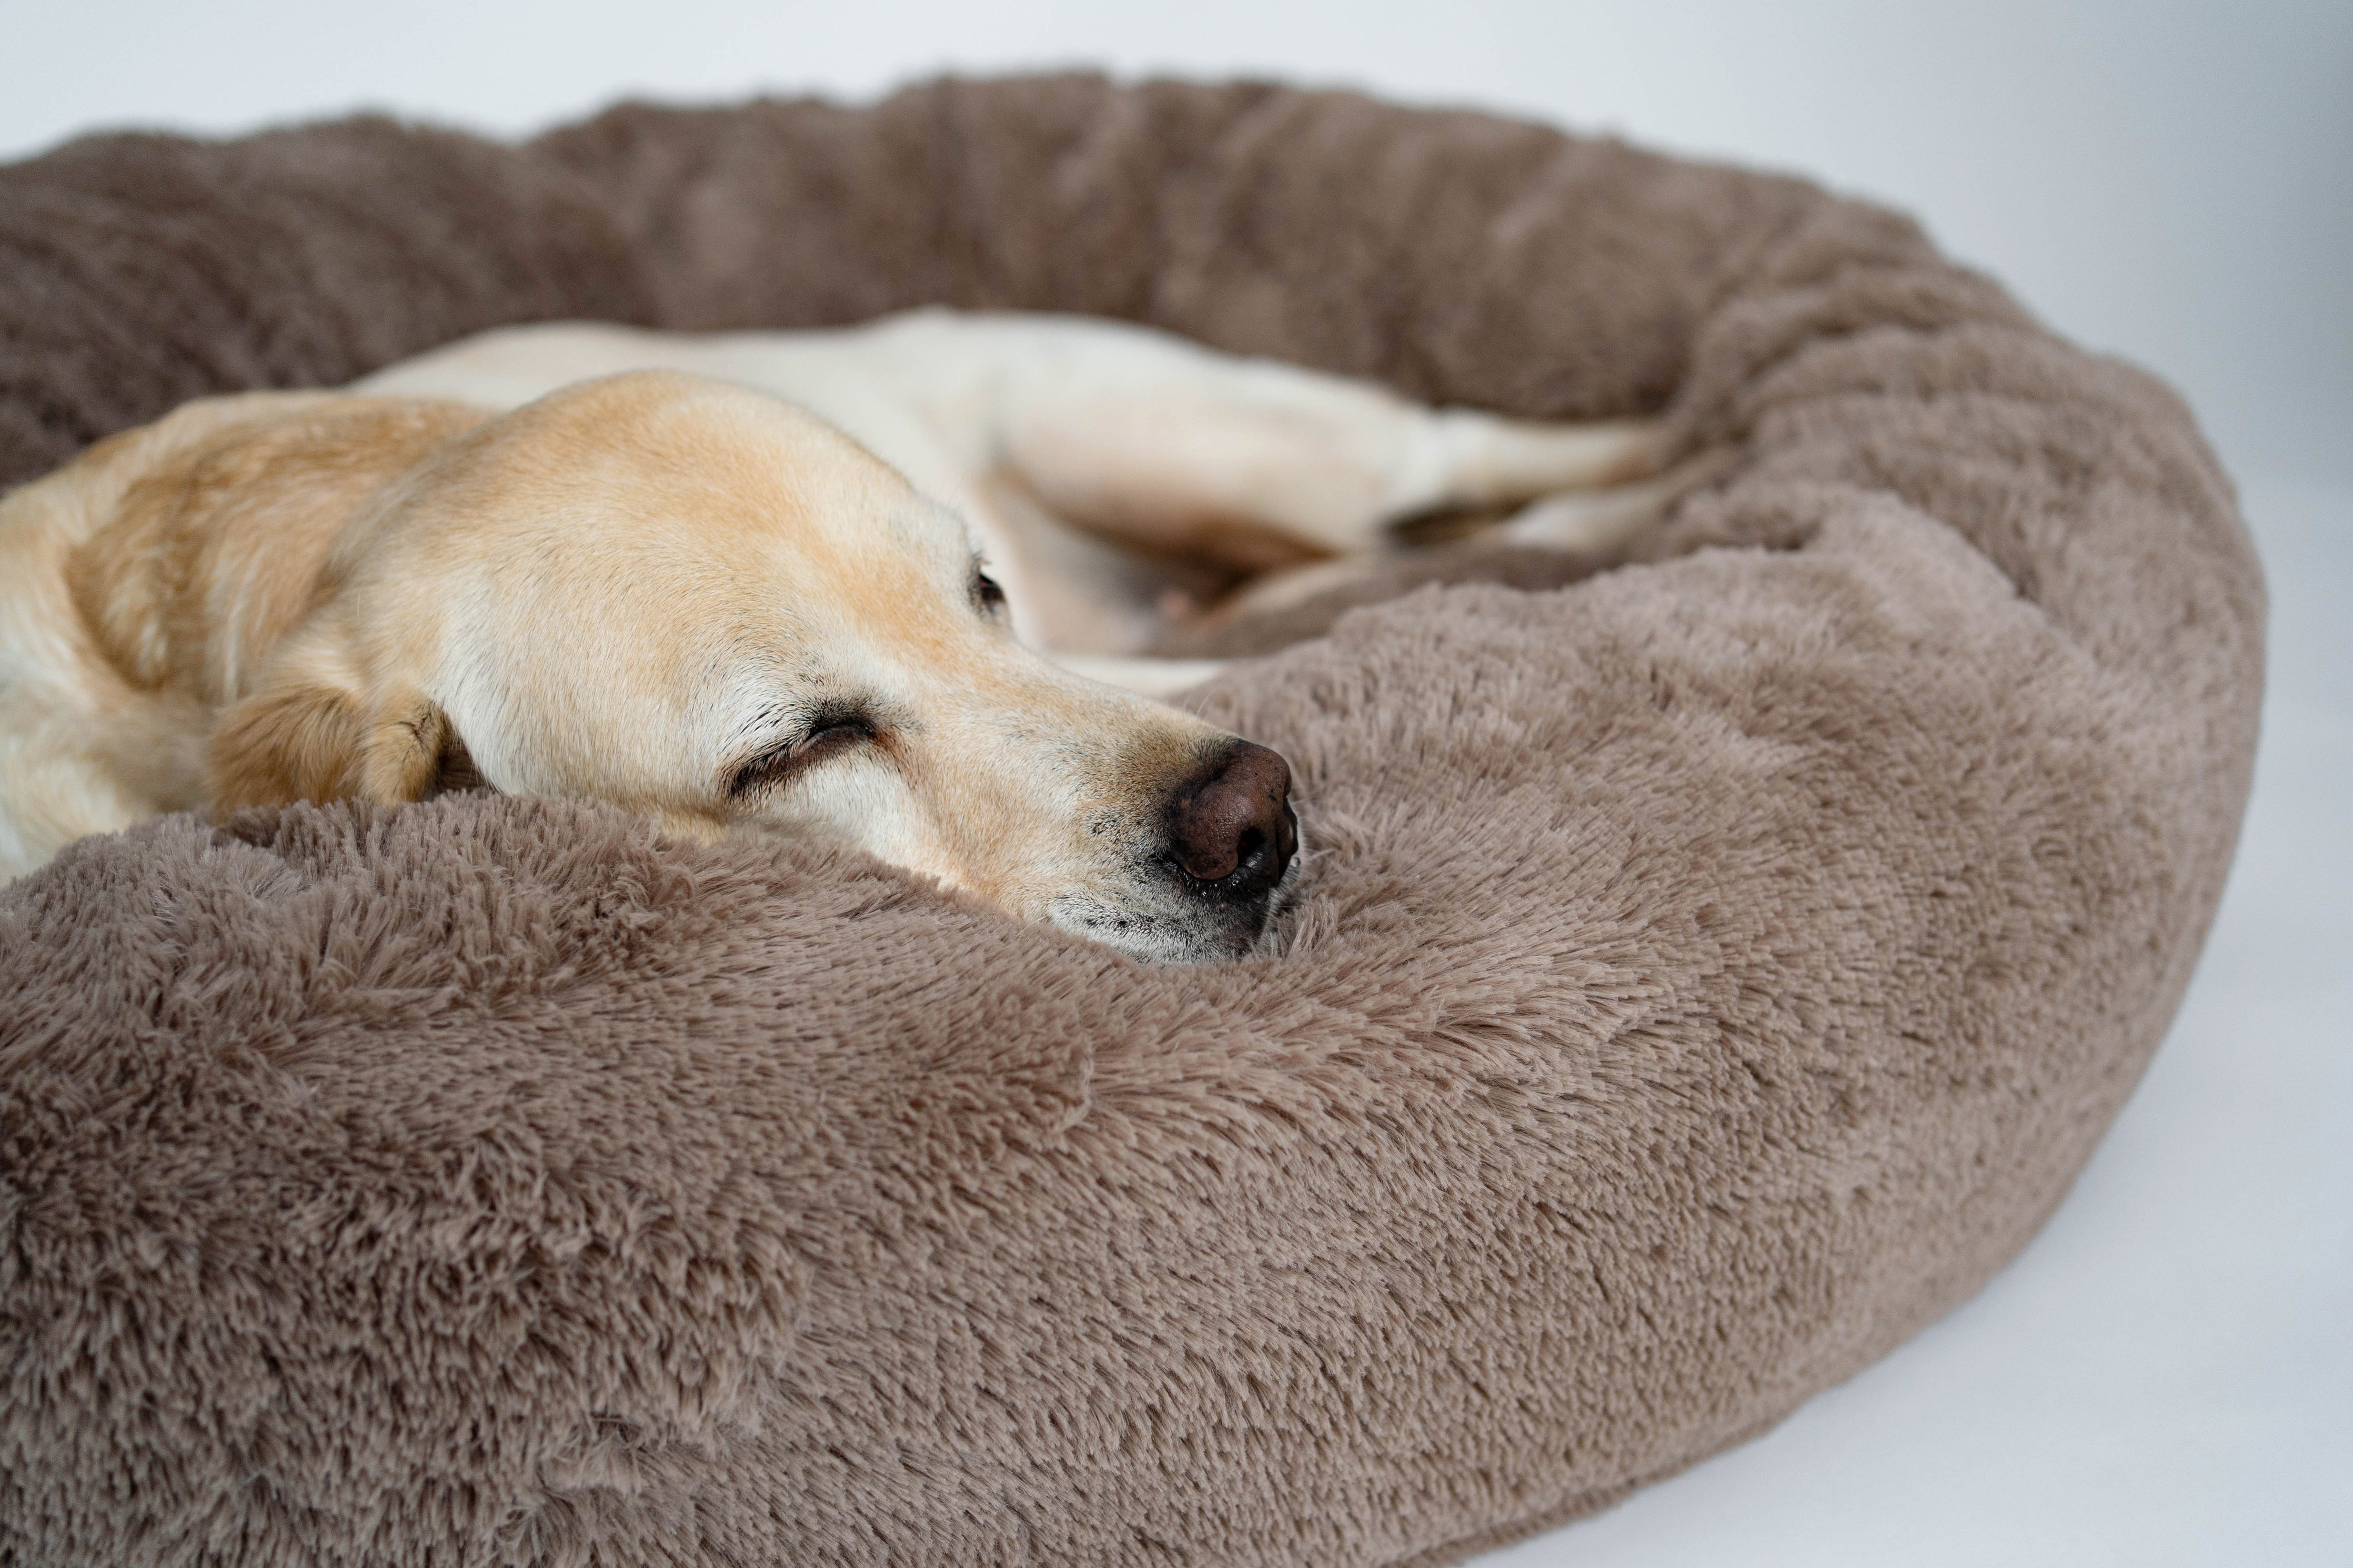 Labrador sleeping on dog bed